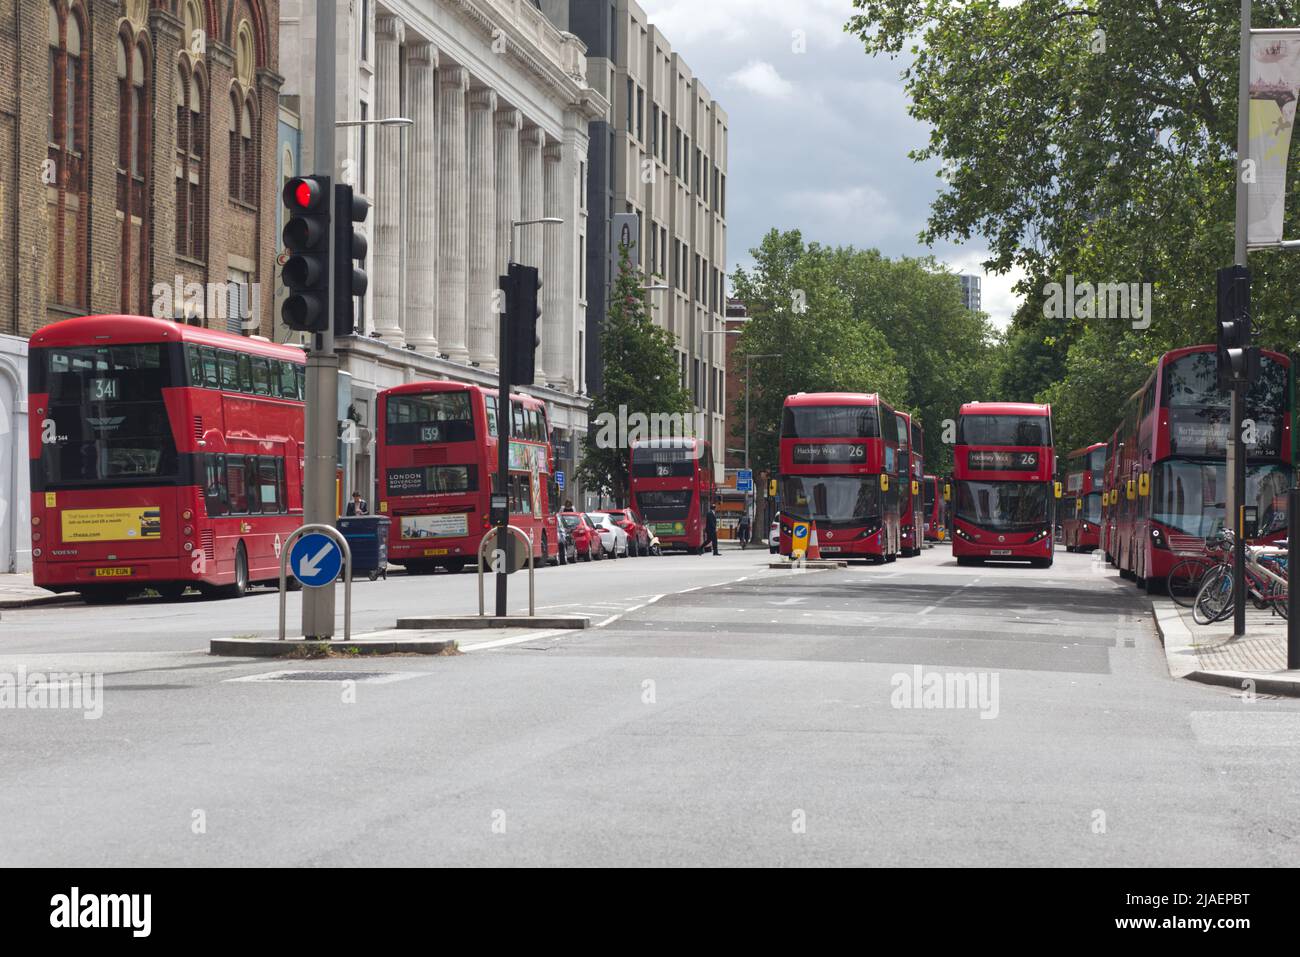 Autobuses de dos pisos, famoso símbolo icónico de la capital británica, Londres Foto de stock